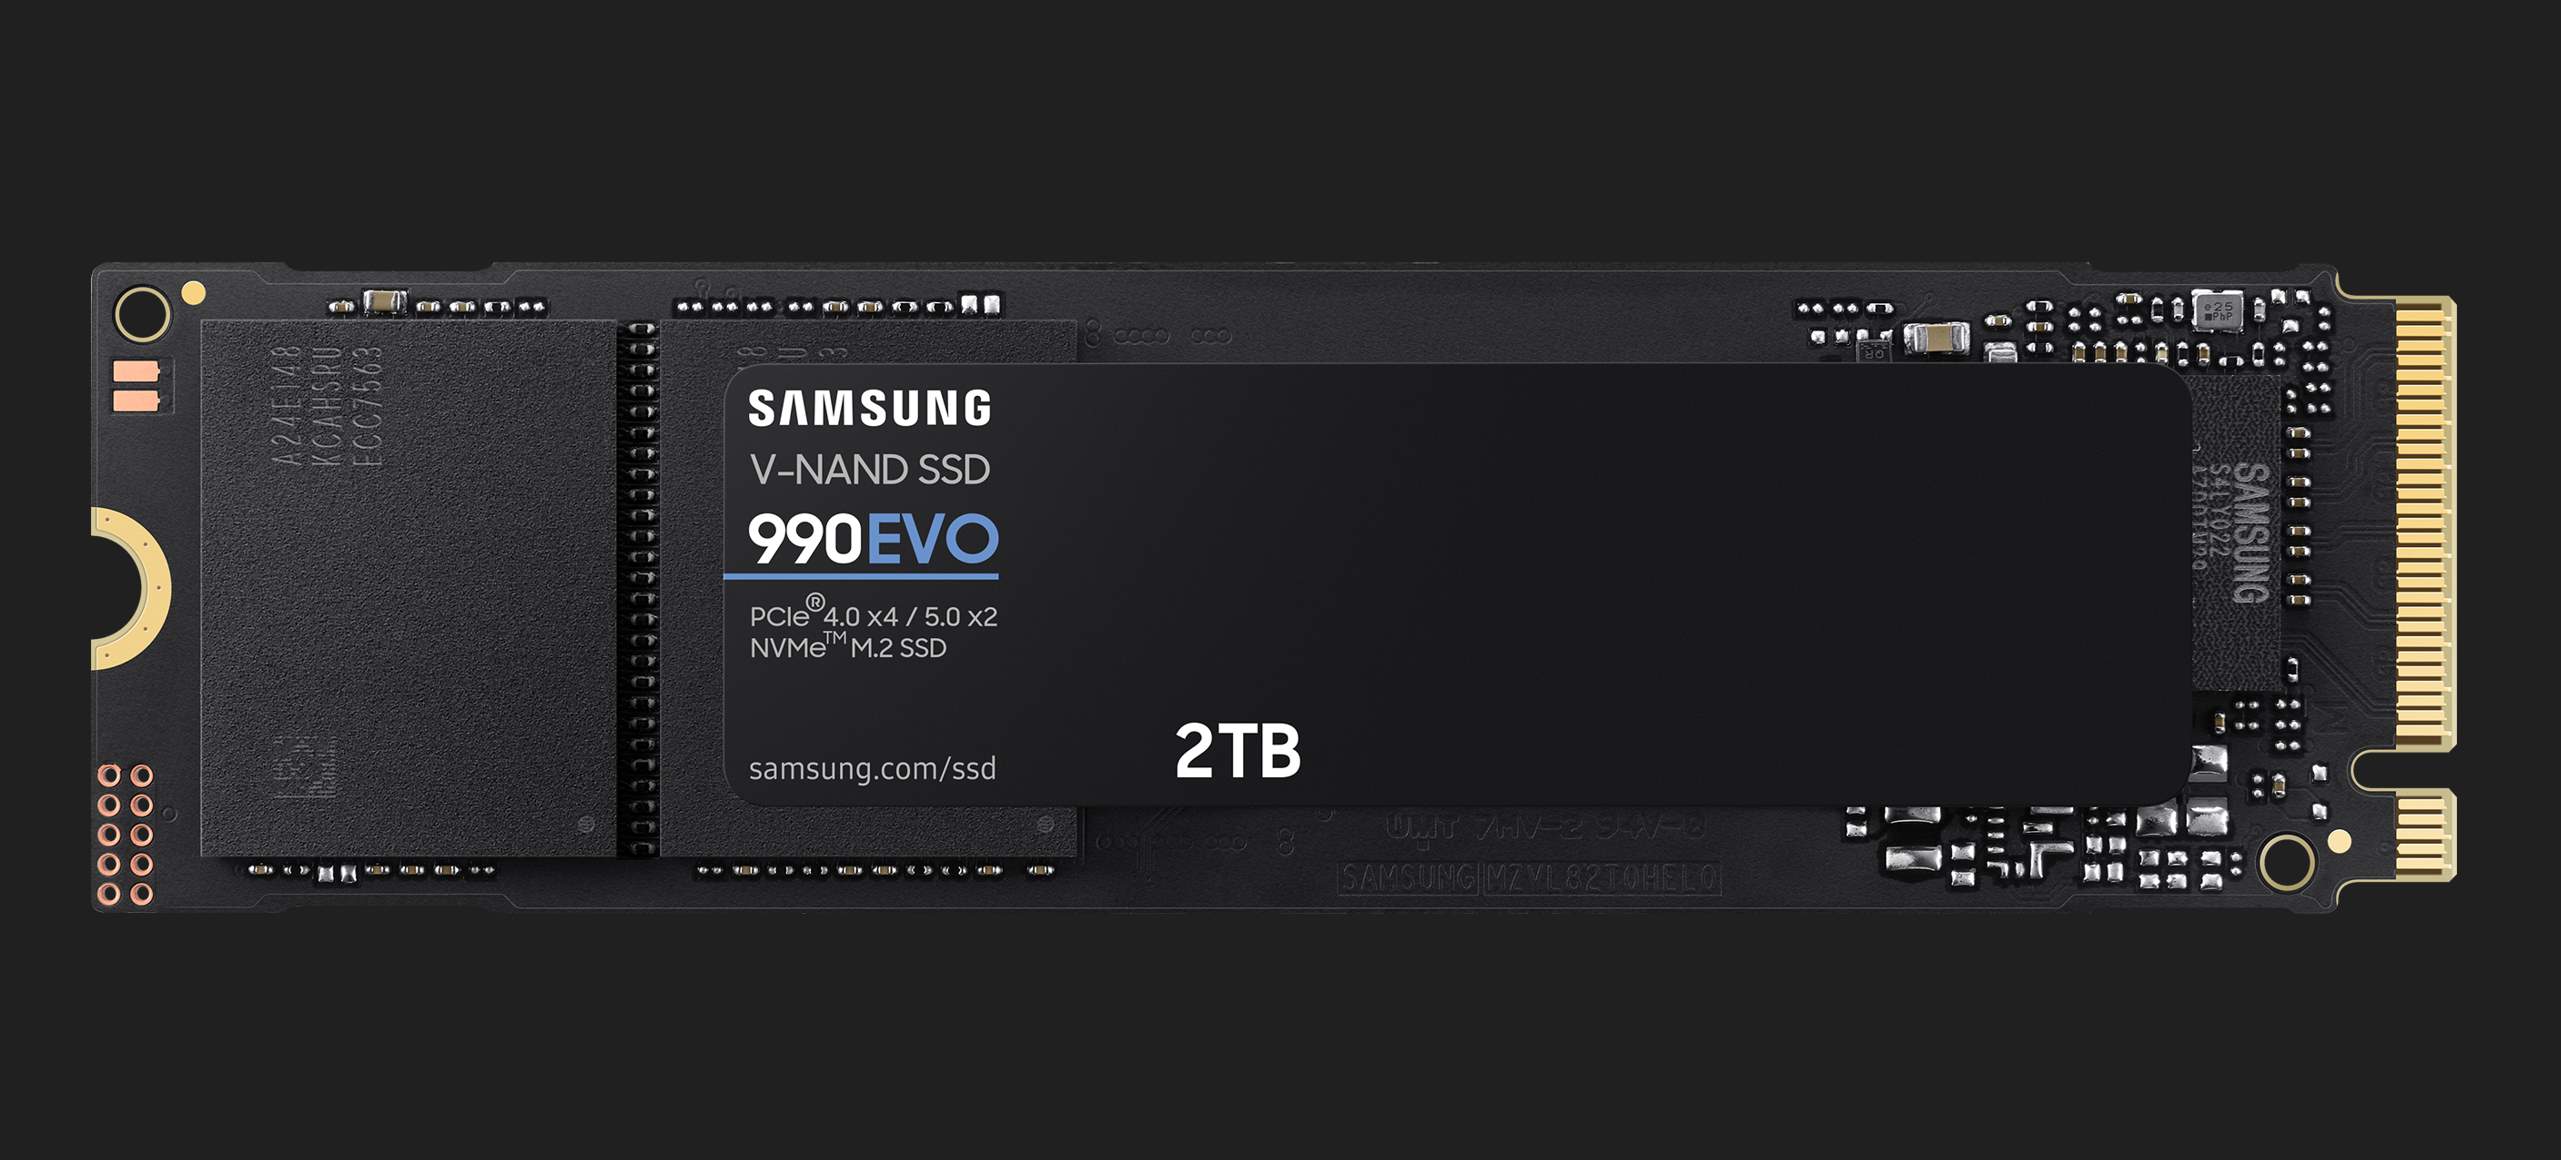 Samsung lancia l’SSD 990 EVO